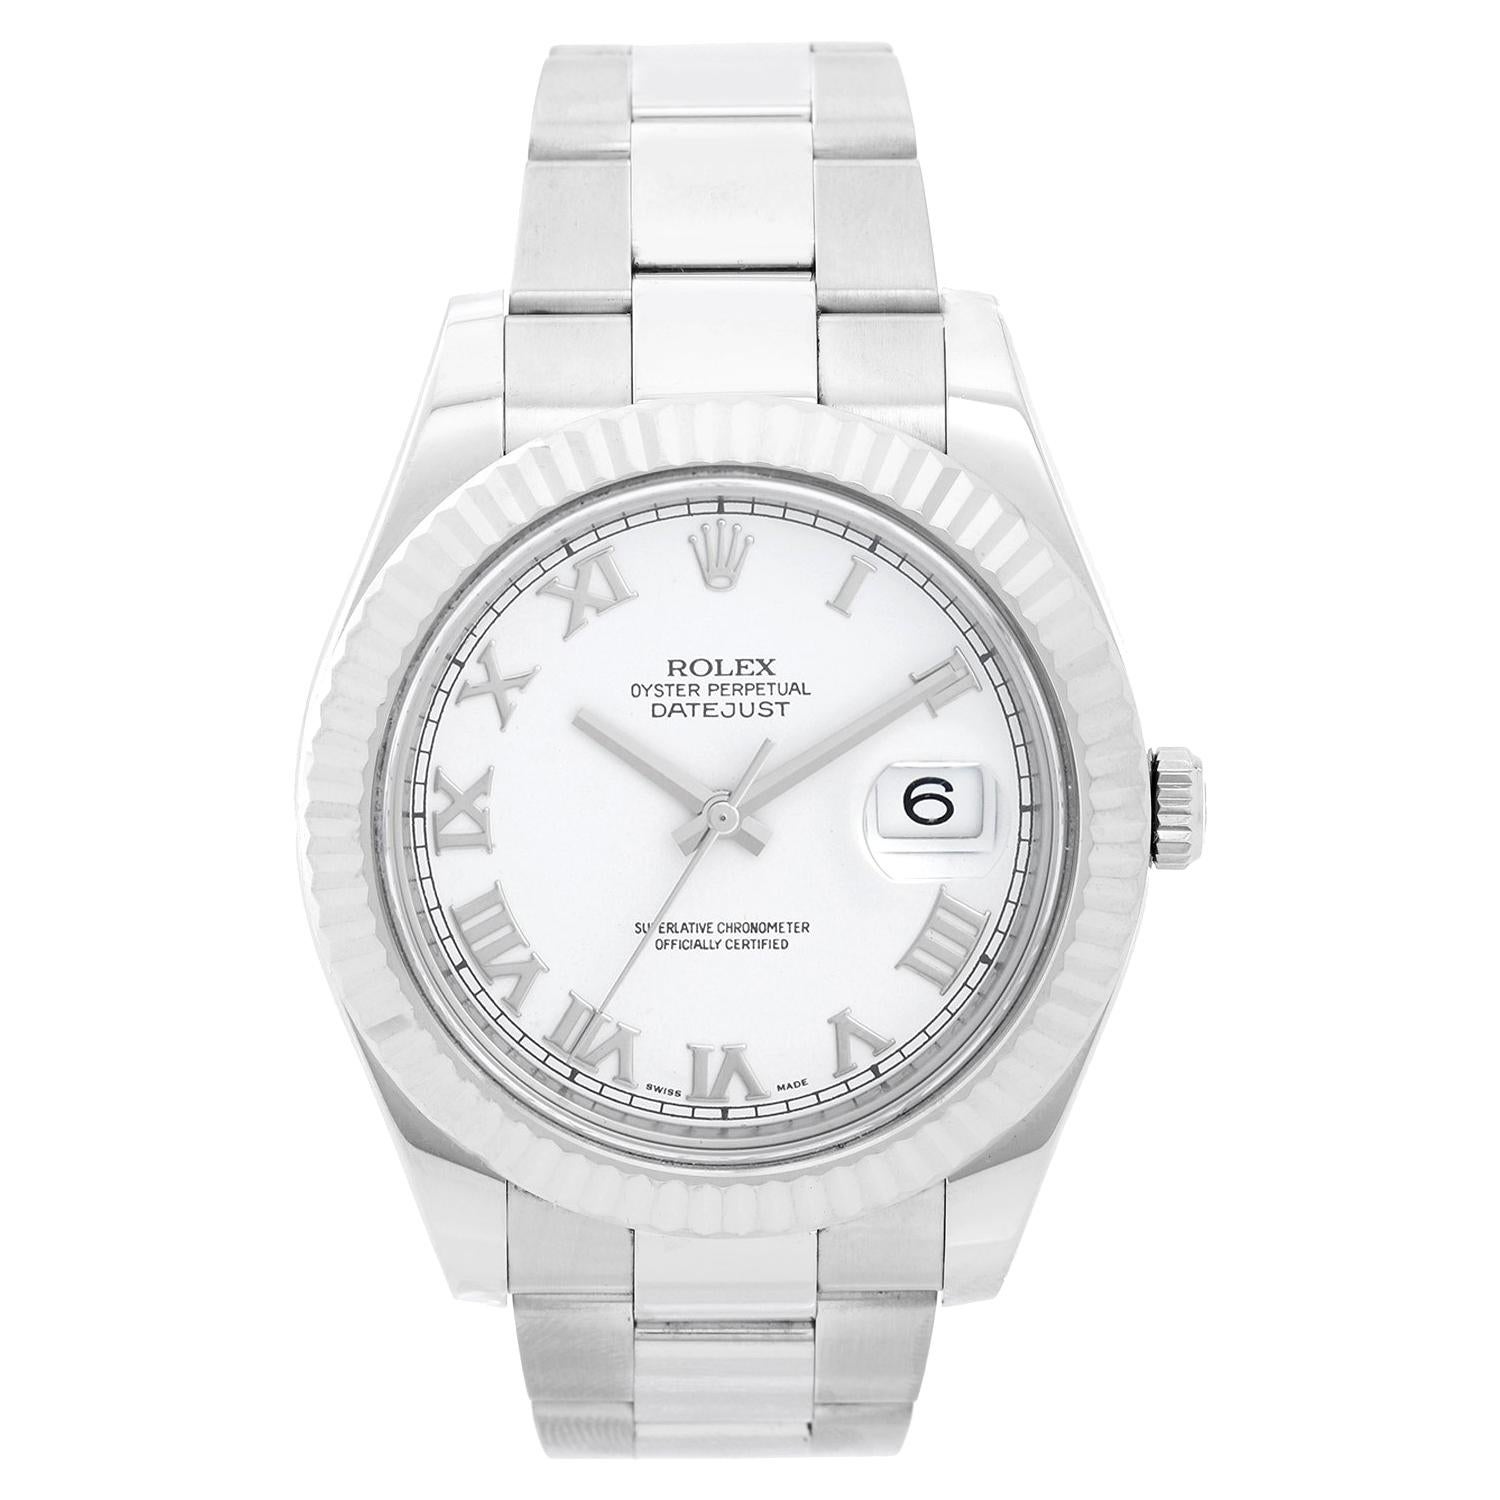 Rolex Datejust II Men's Stainless Steel Watch 116334